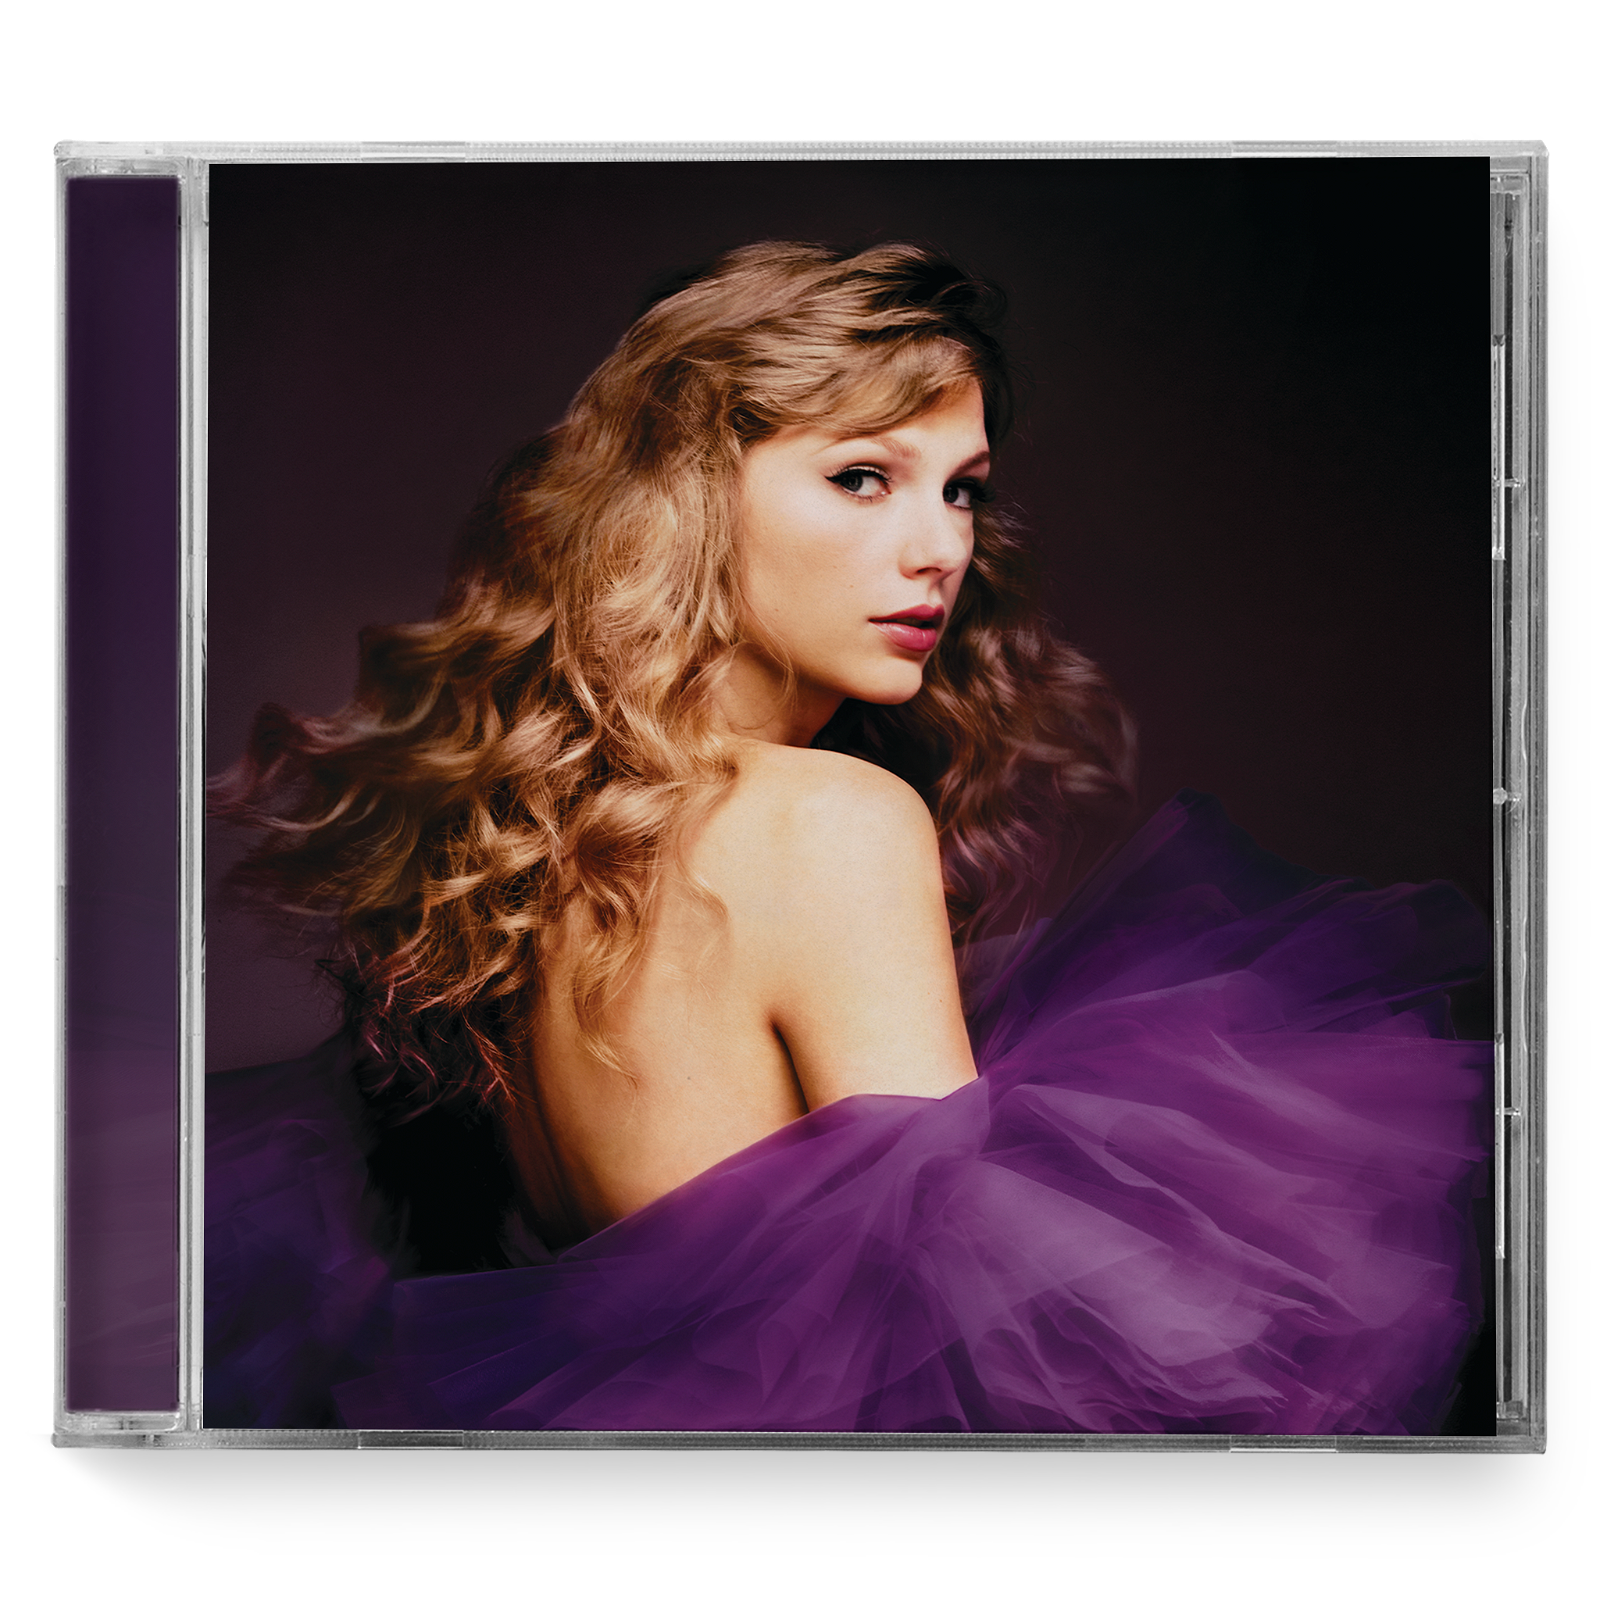 Speak Now (Taylor's Version) Taylor's edition